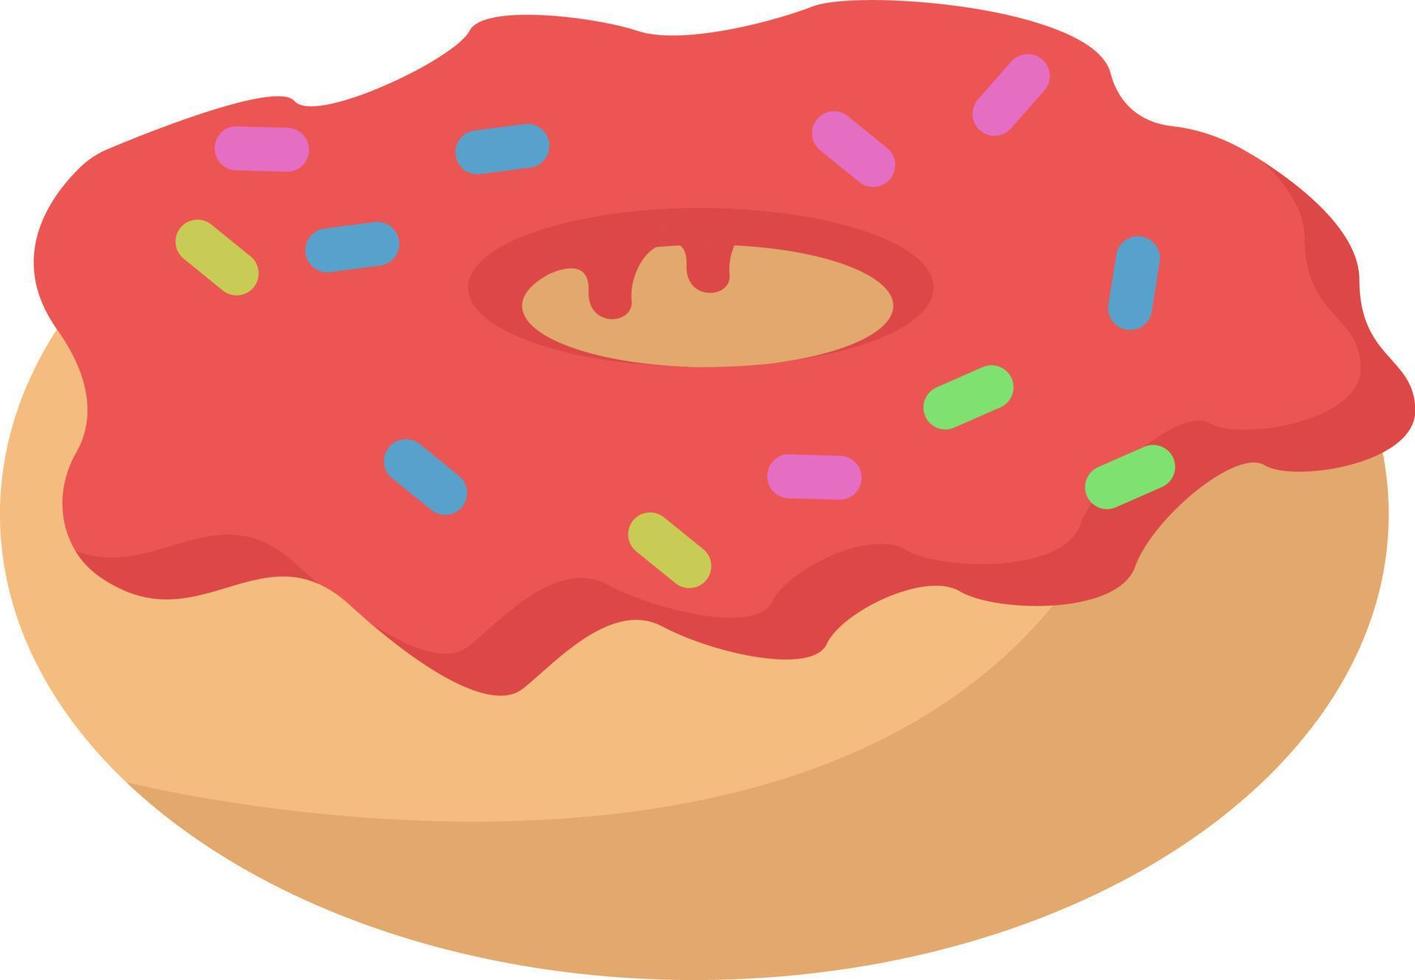 Red donut, illustration, vector on white background